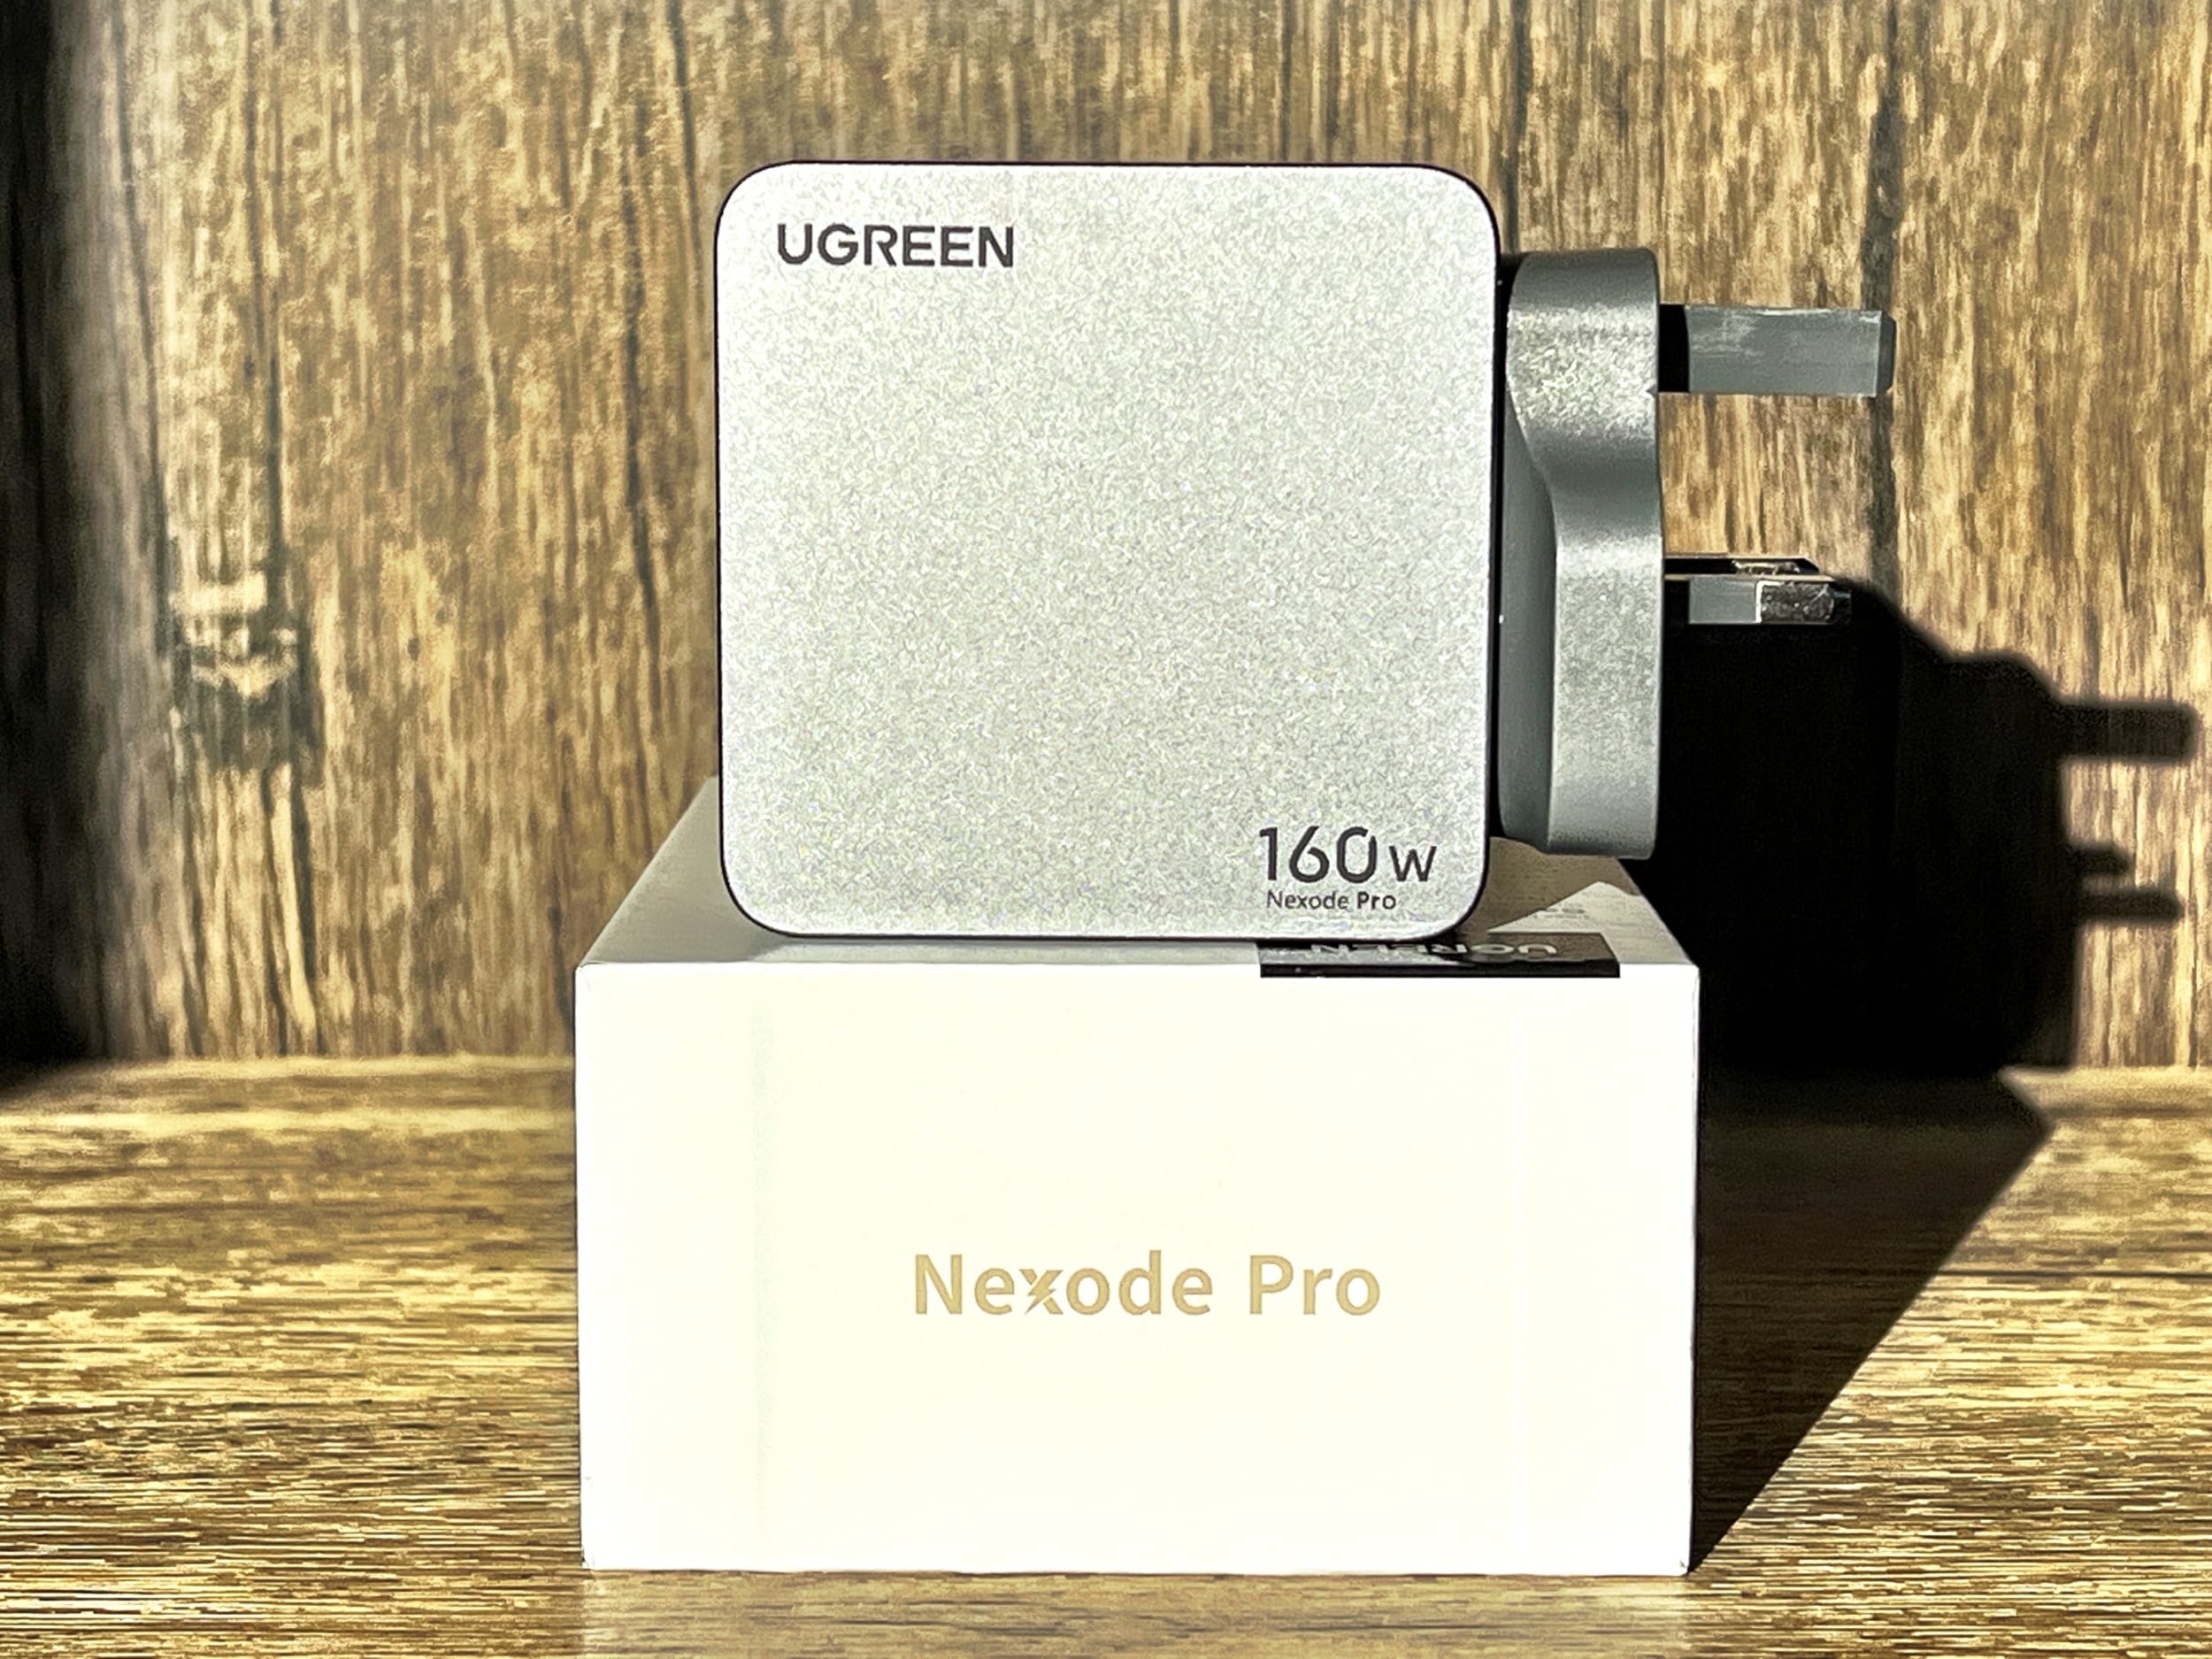 UGREEN unveils new Nexode Pro 160W 4-Port GaN Fast Charger -   News